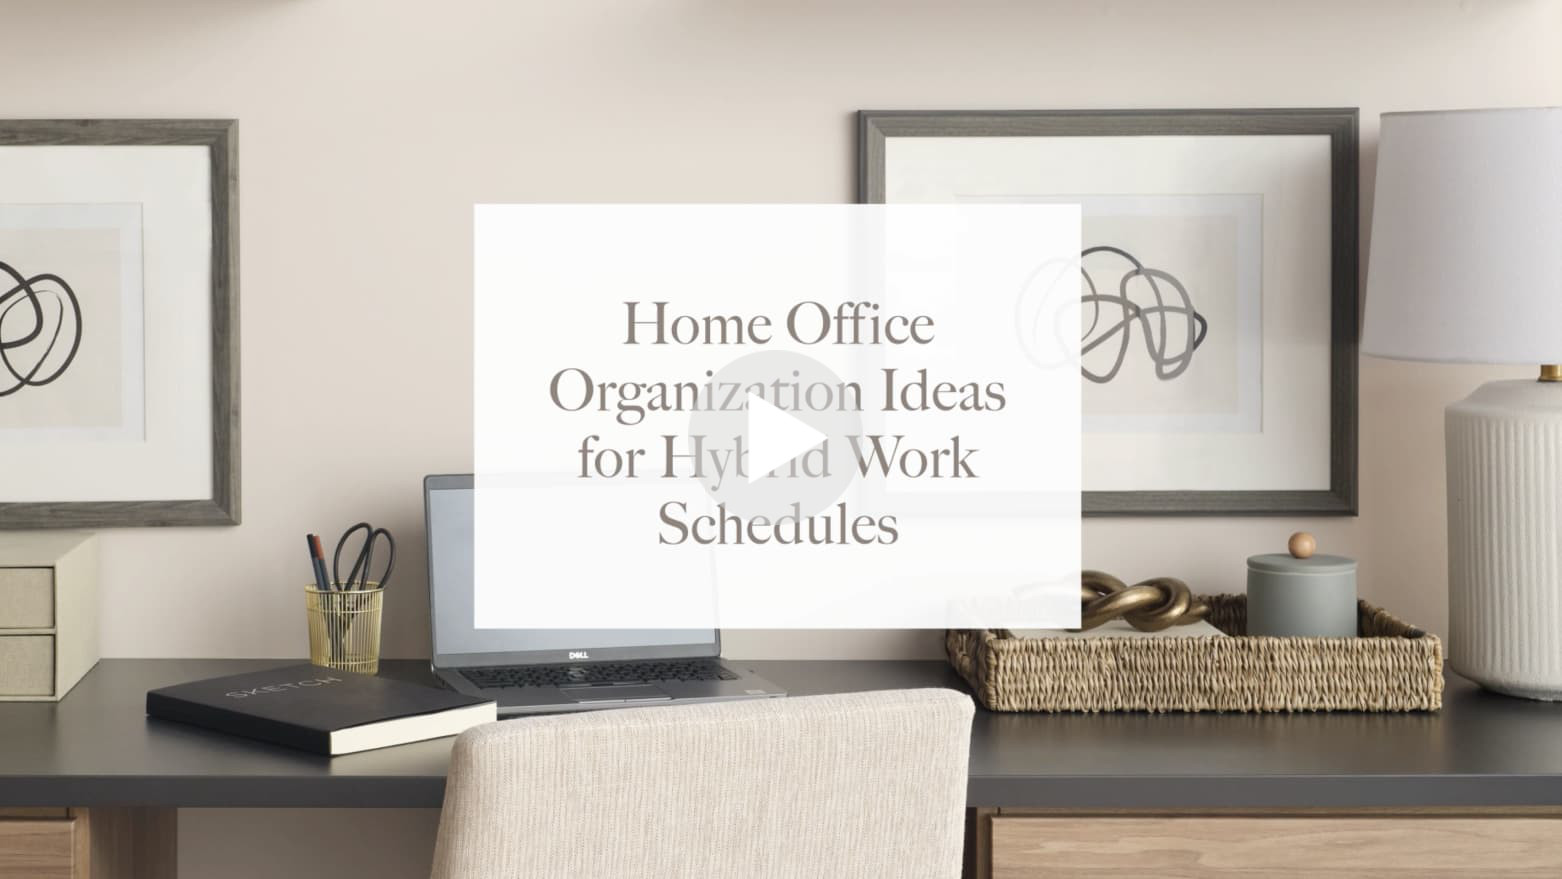 Home Organization Ideas Video Poster